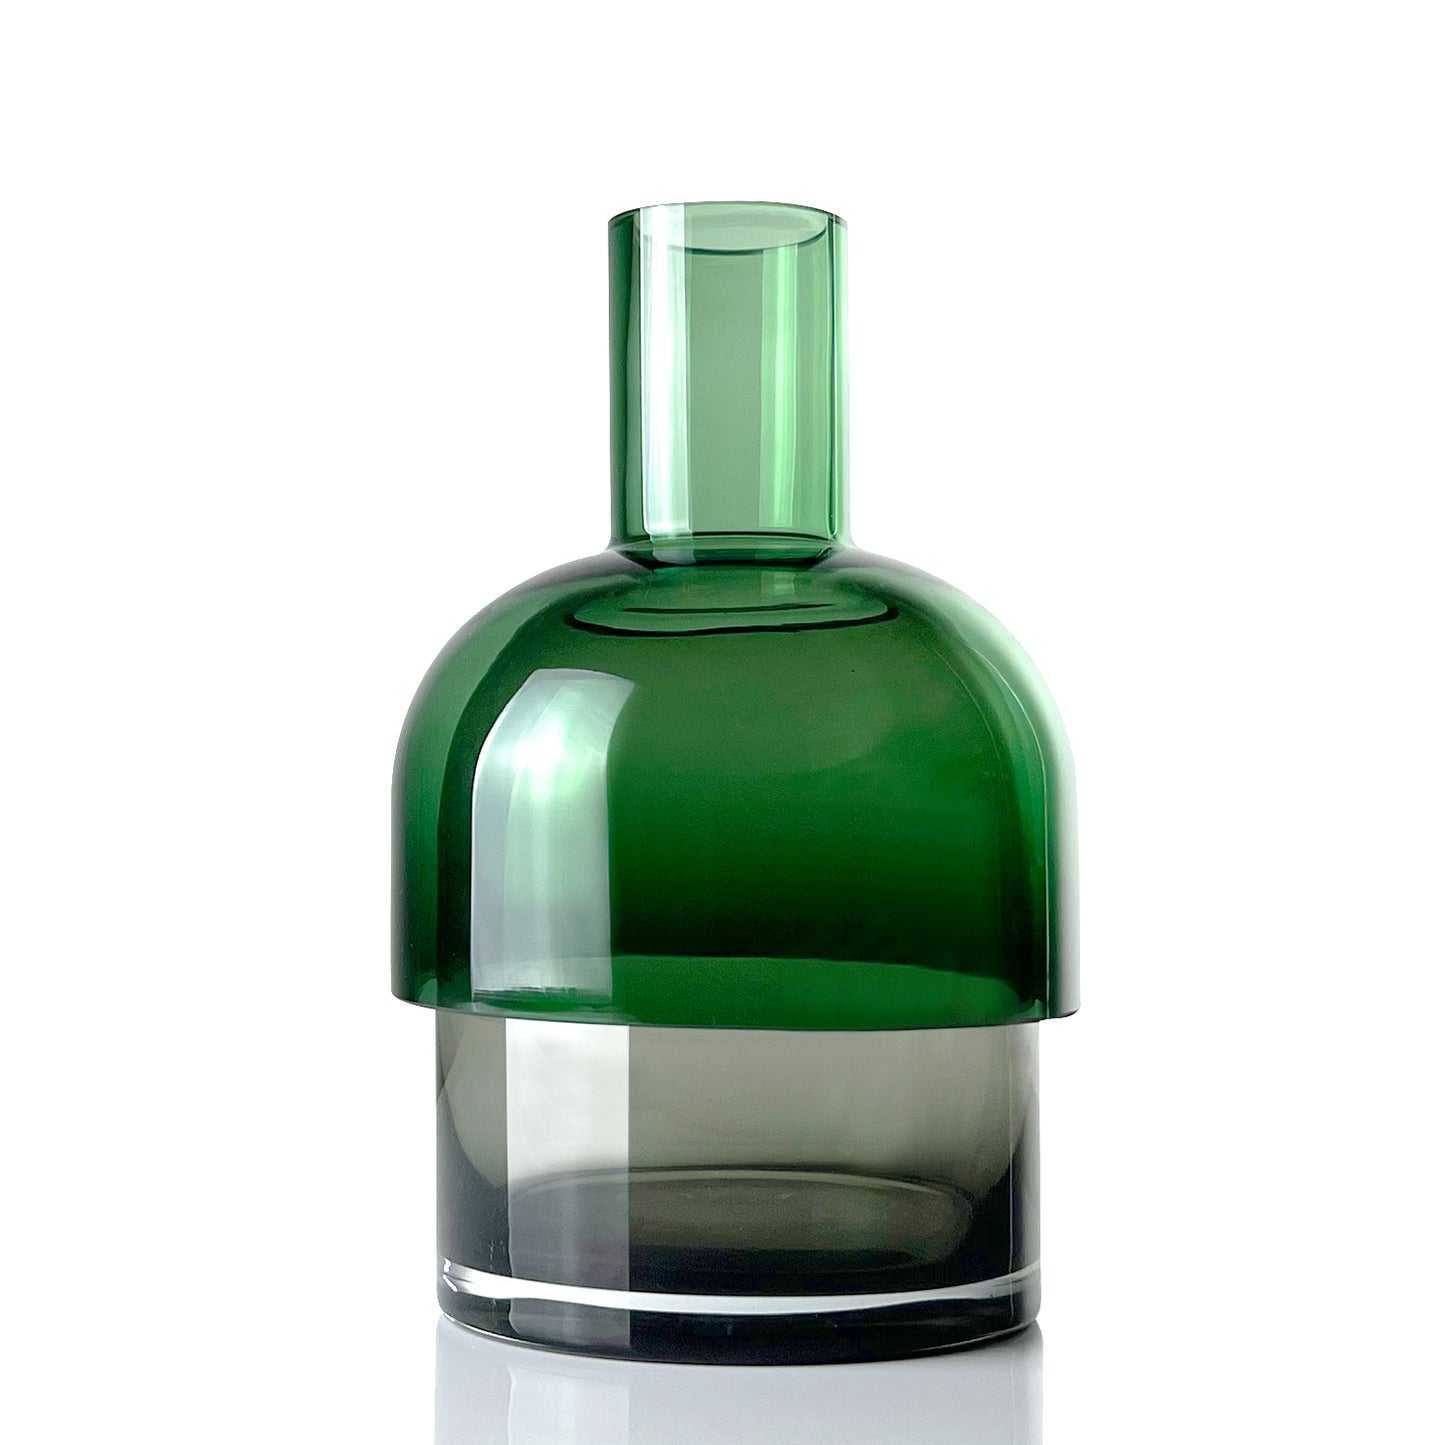 Flip Vase Medium Green and Gray - Vase - Reversible - Borosilicate Glass - Dual Sided - Floral